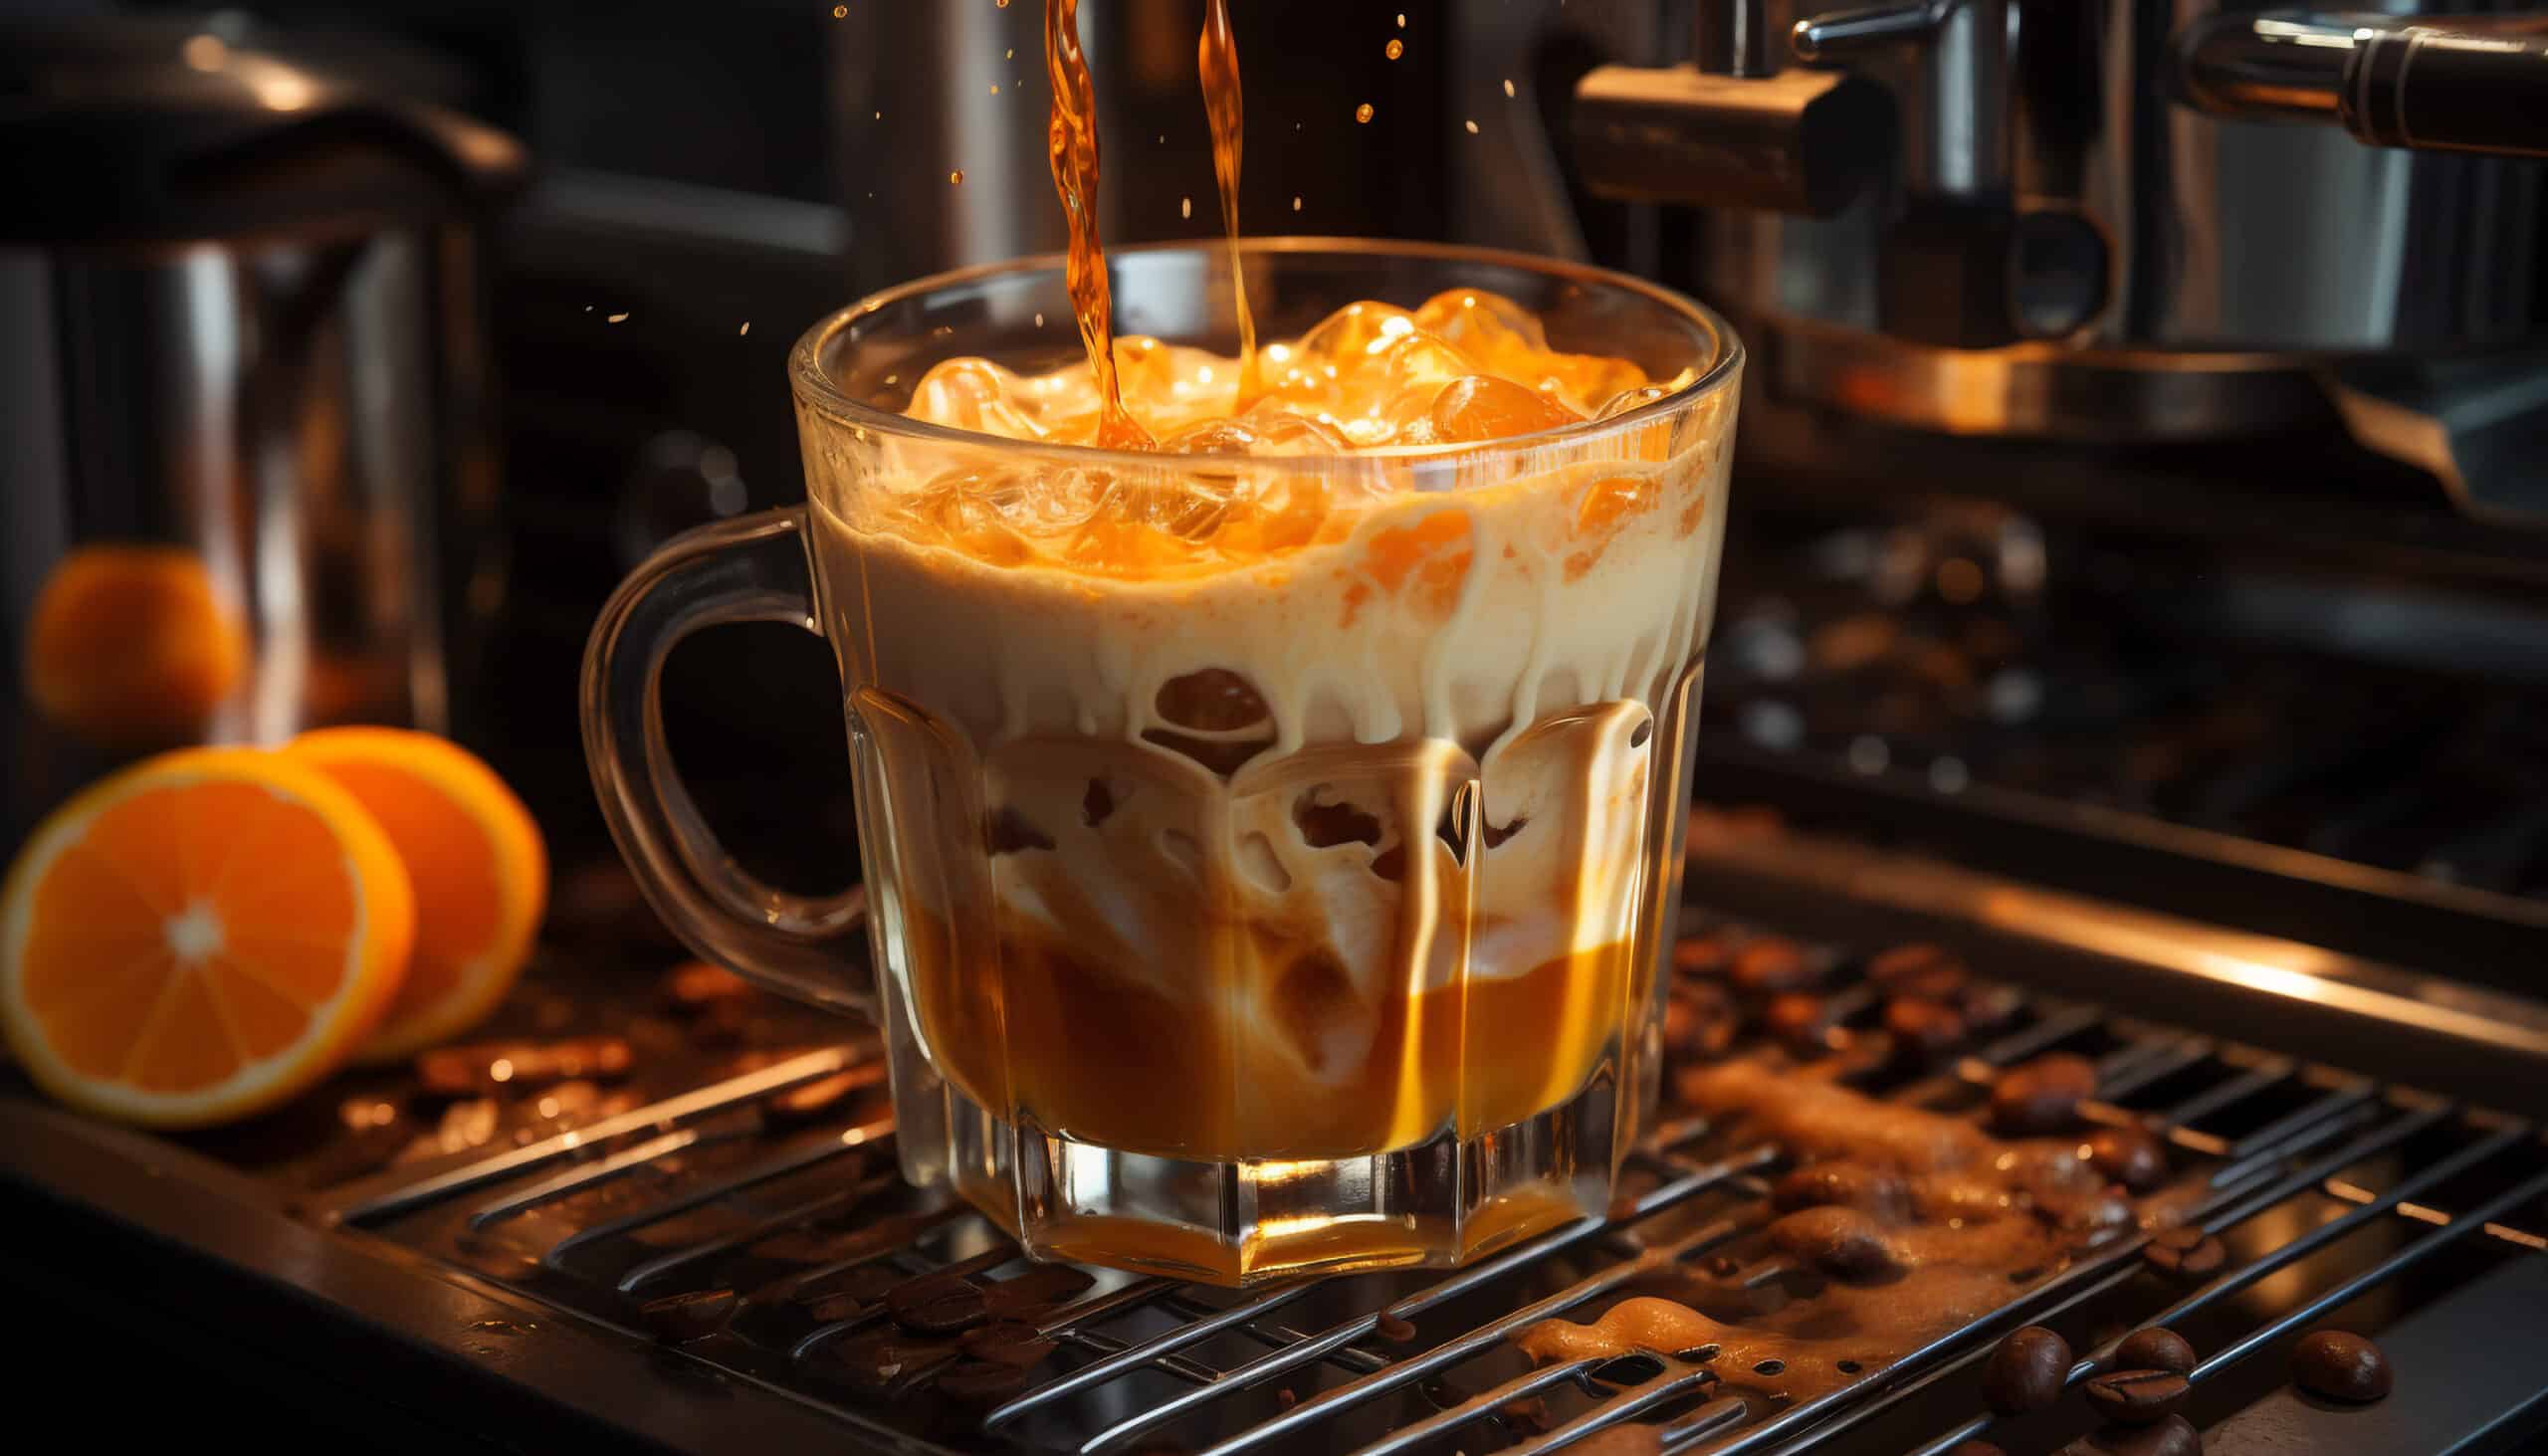 www.appr.com : How To Make Iced Latte With Espresso Machine?